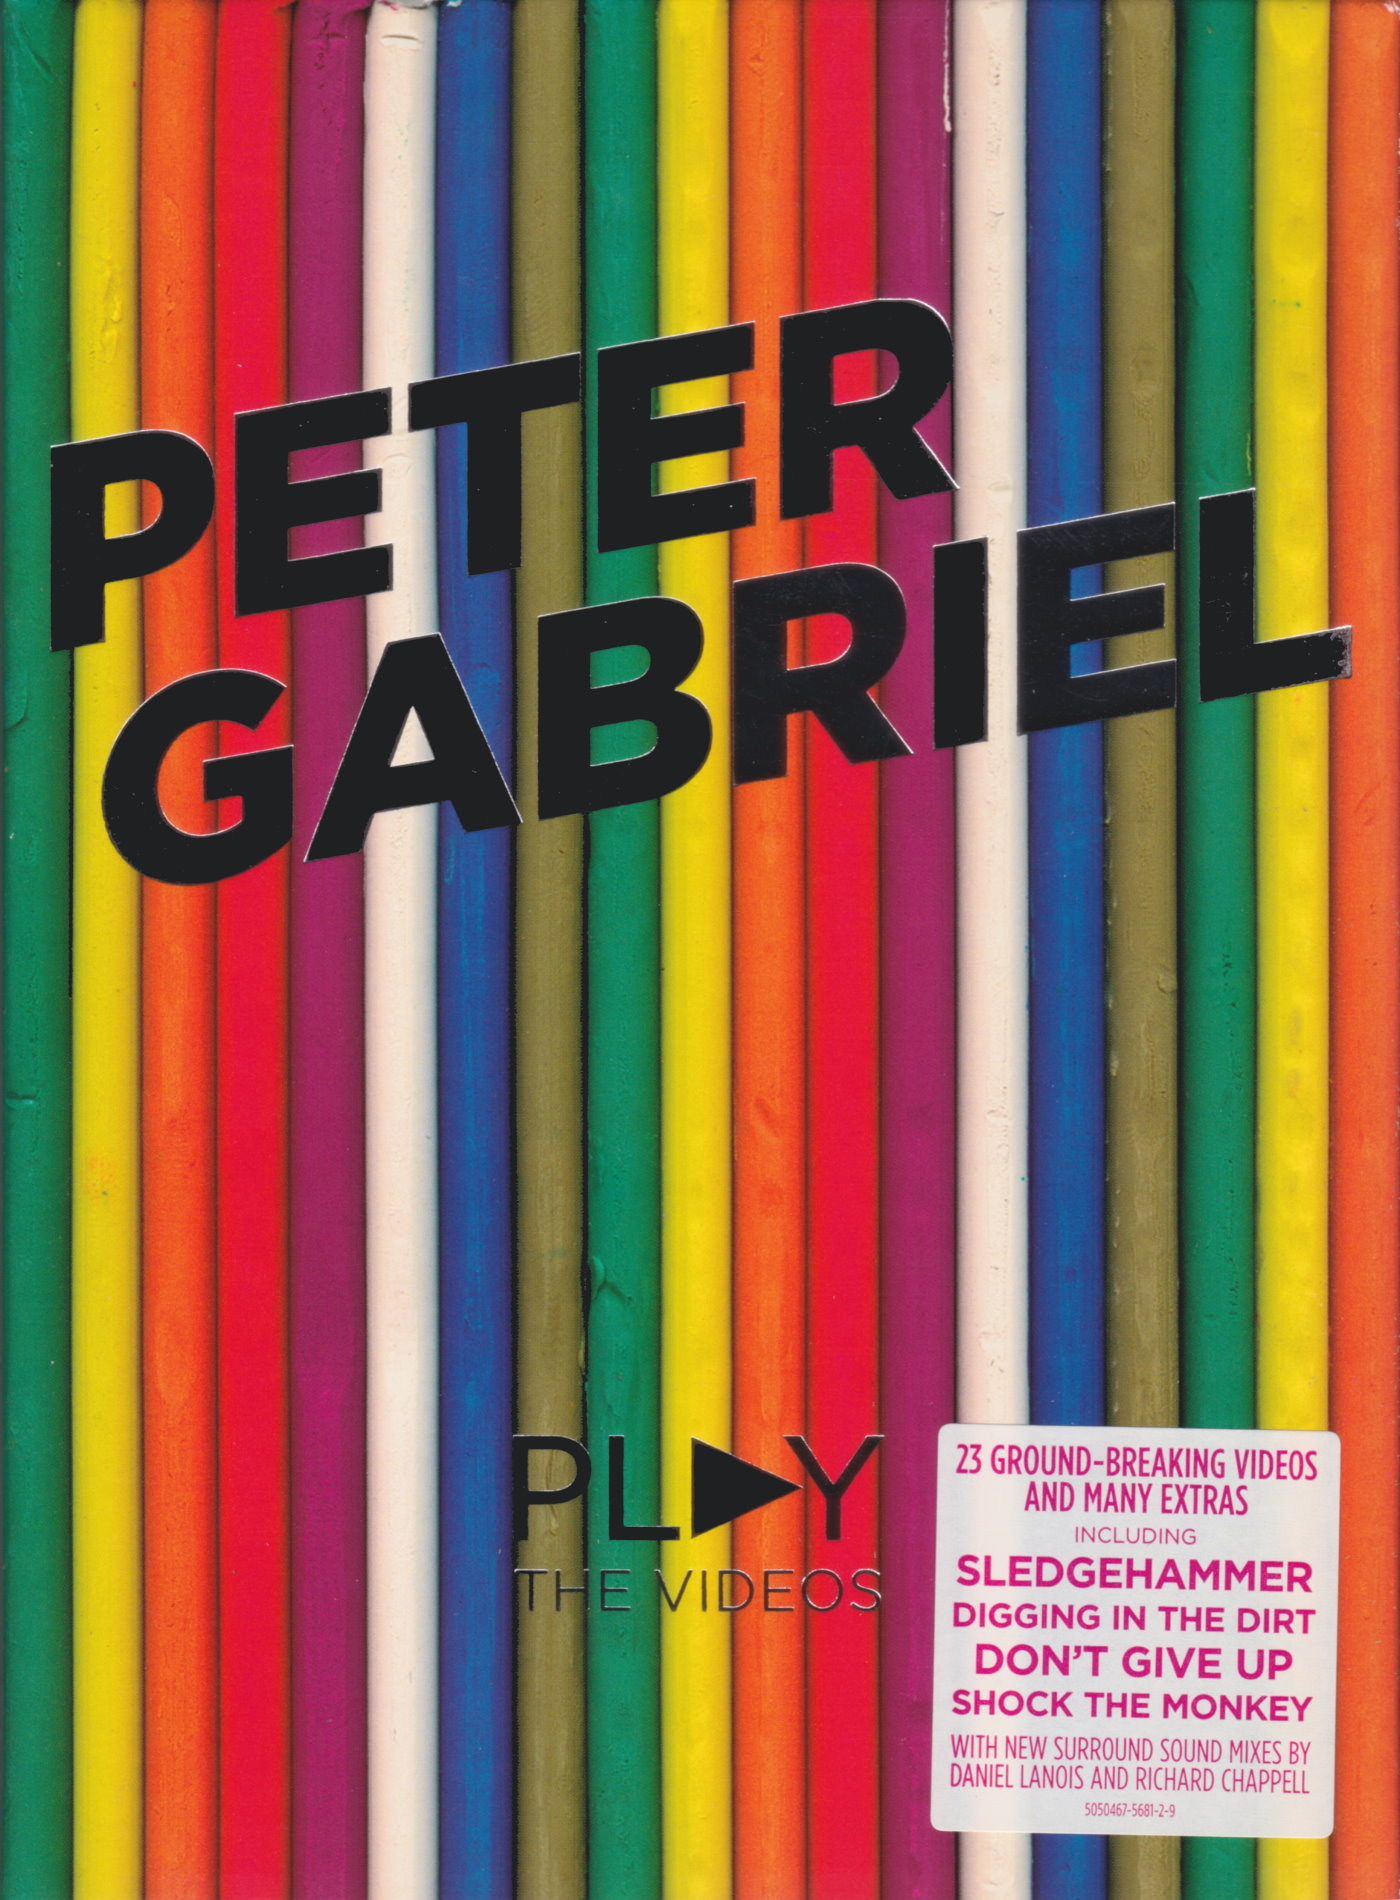 Cover - Peter Gabriel - Play - The Videos.jpg